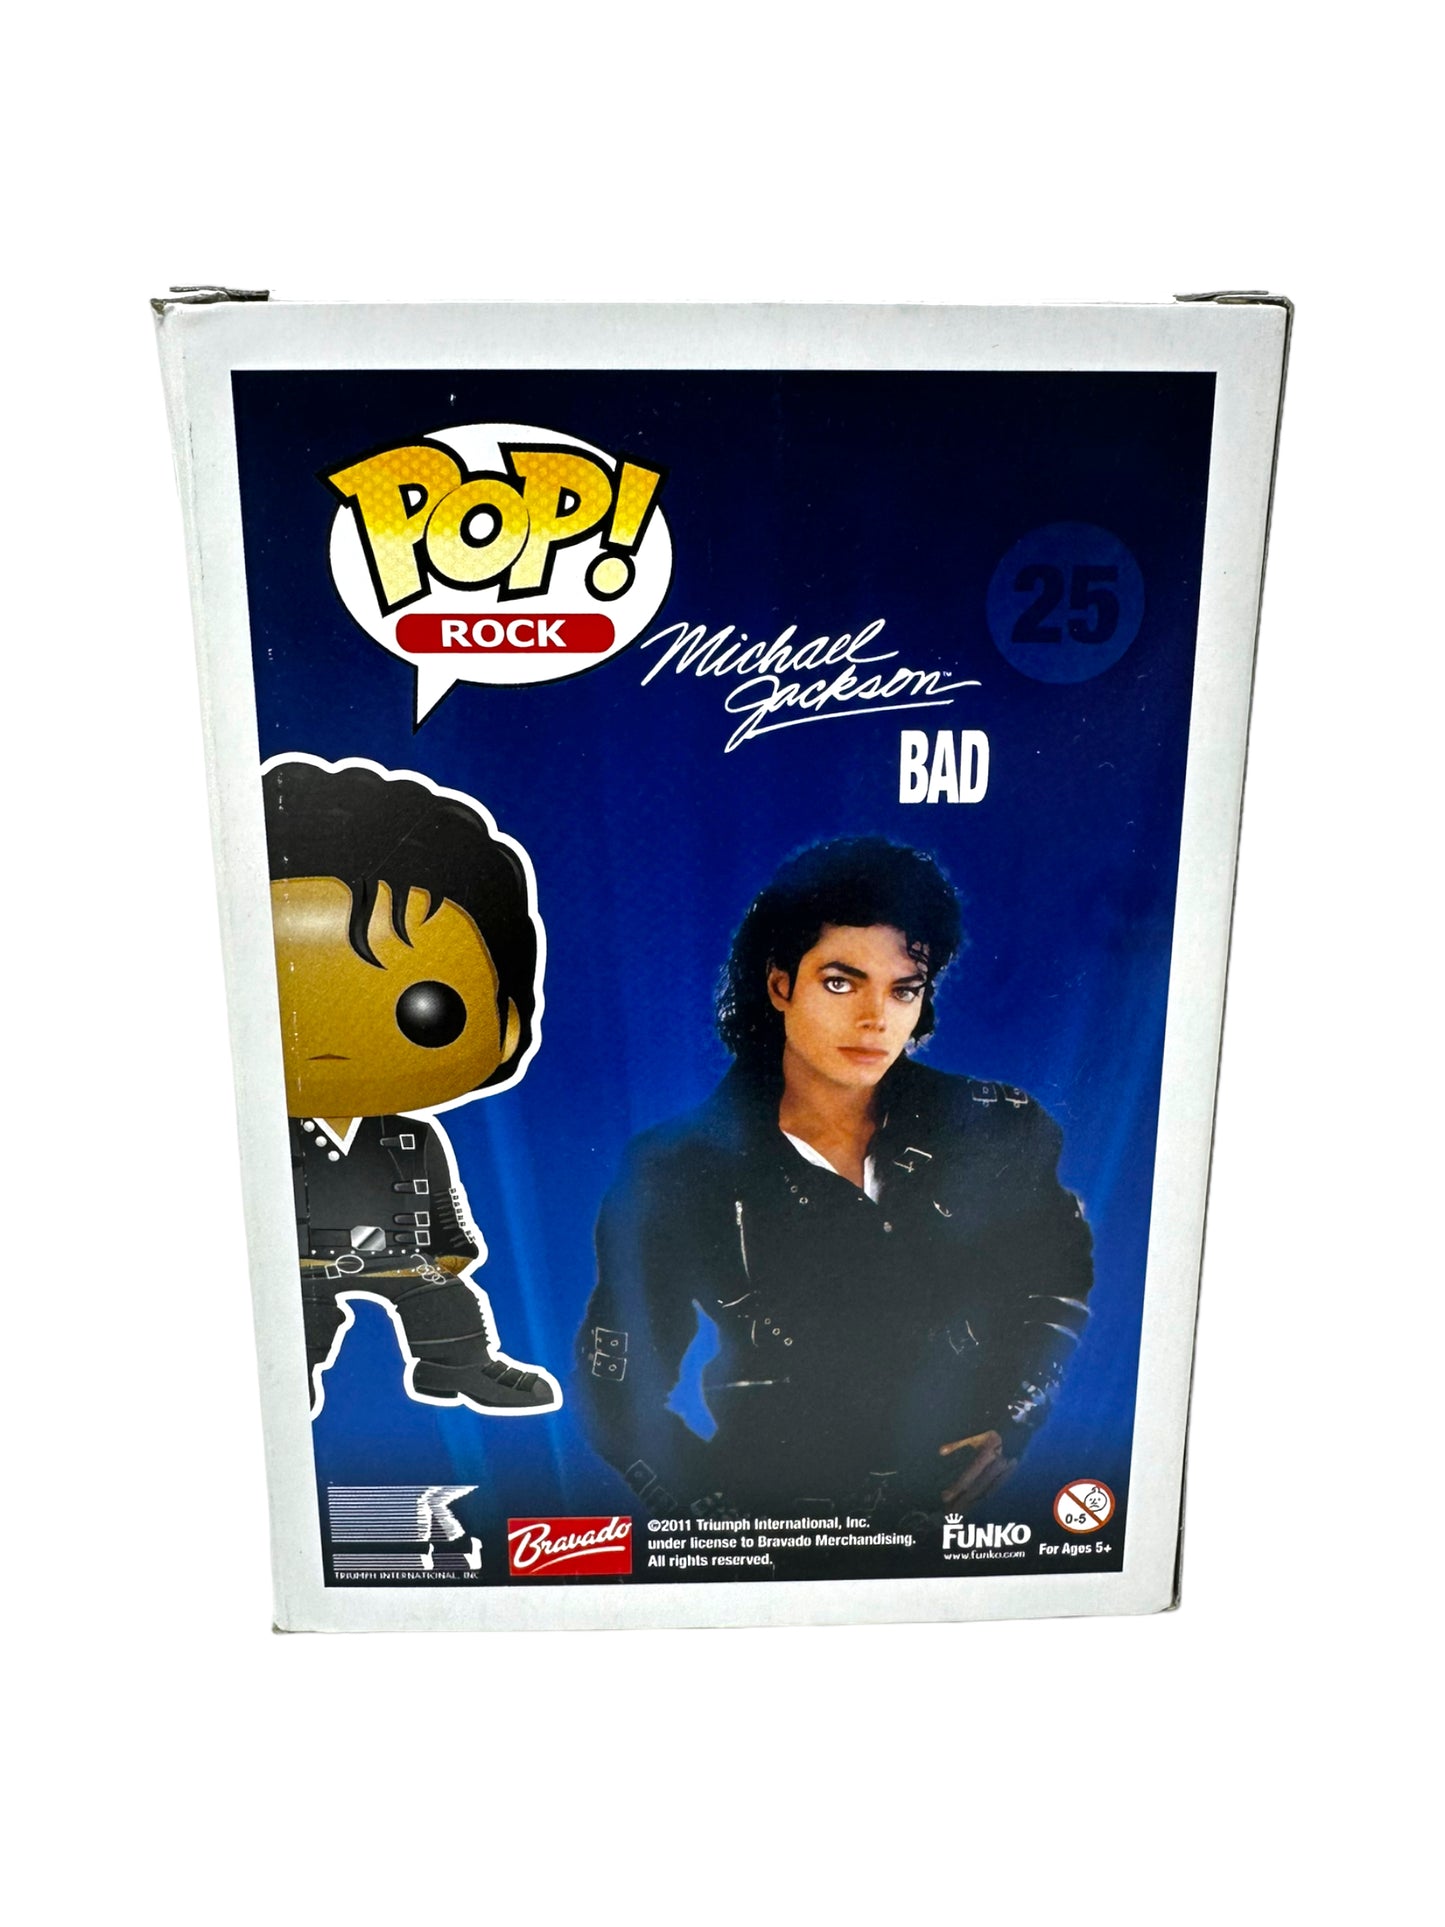 Sold 9/25 2013 Michael Jackson 25 (Bad)